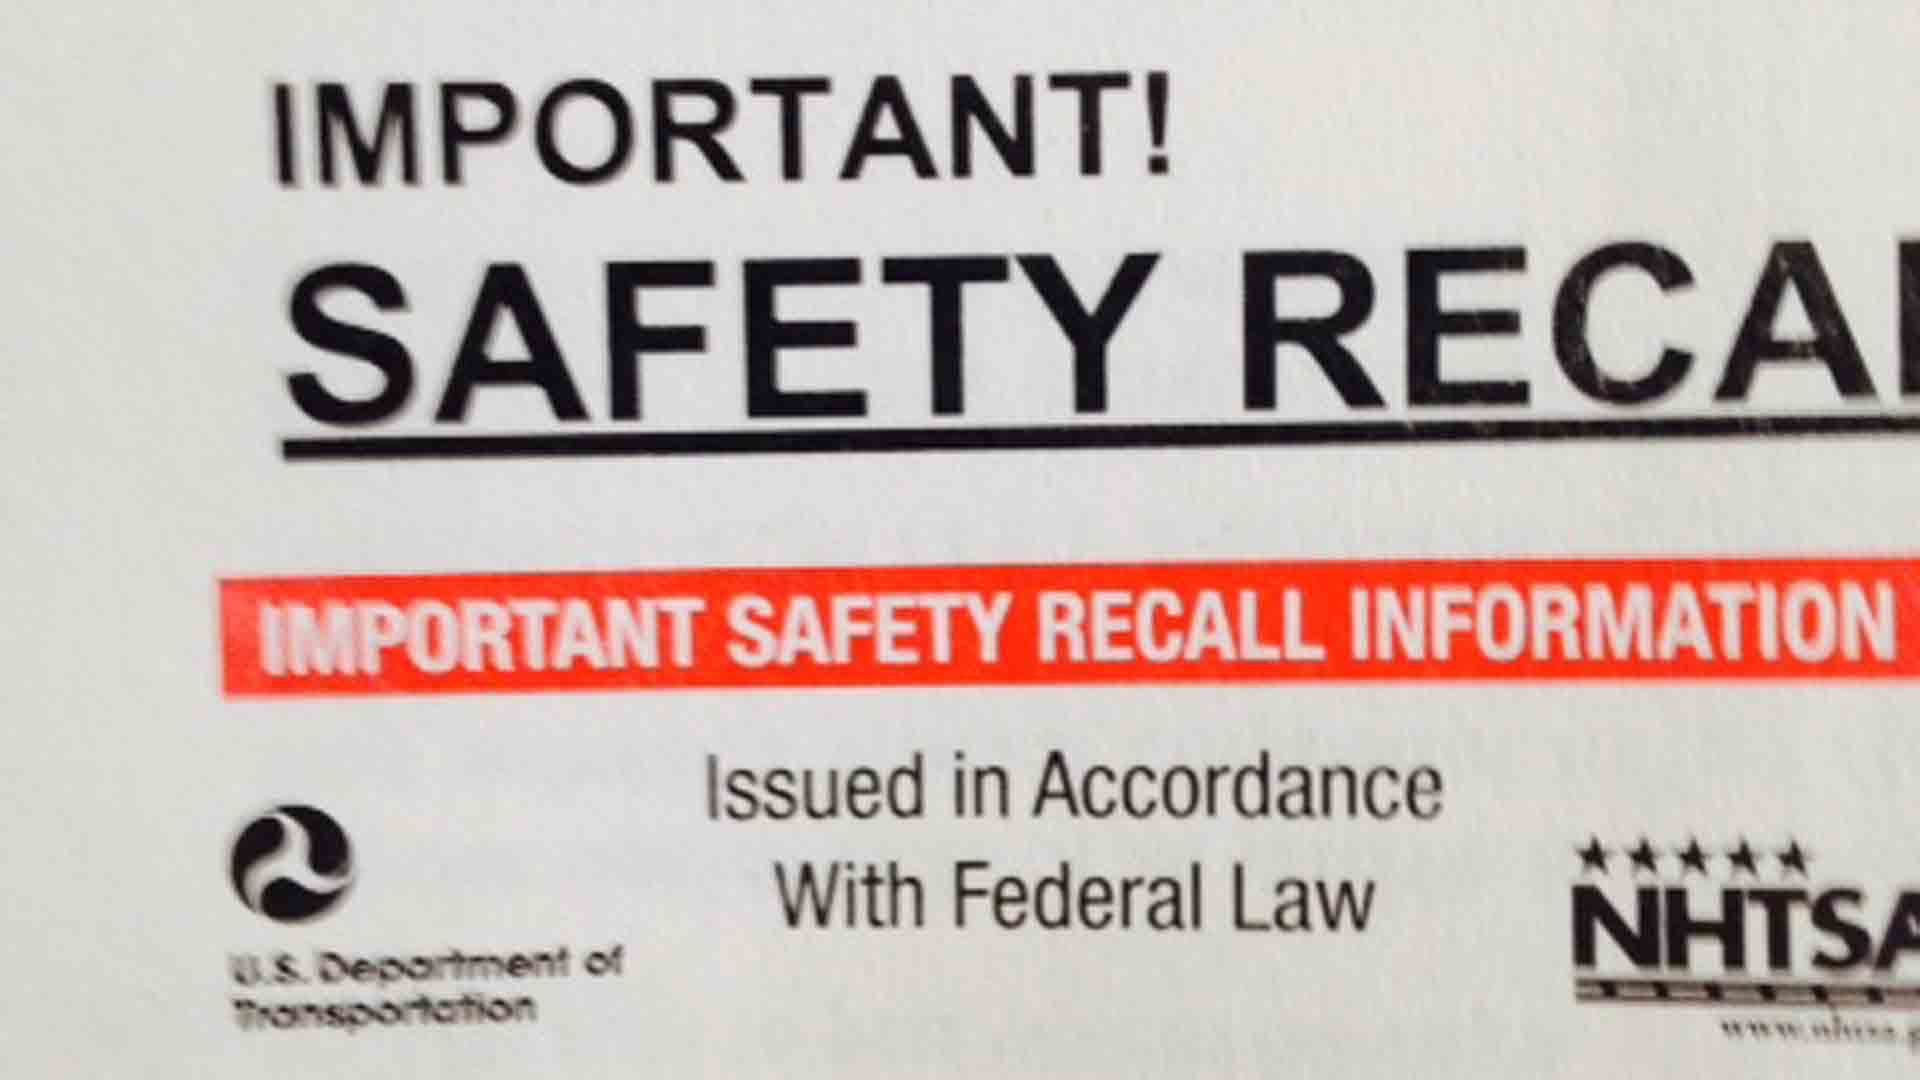 is my 2004 jeep grand cherokee recall rear gas tank fire hazard on the recall list?